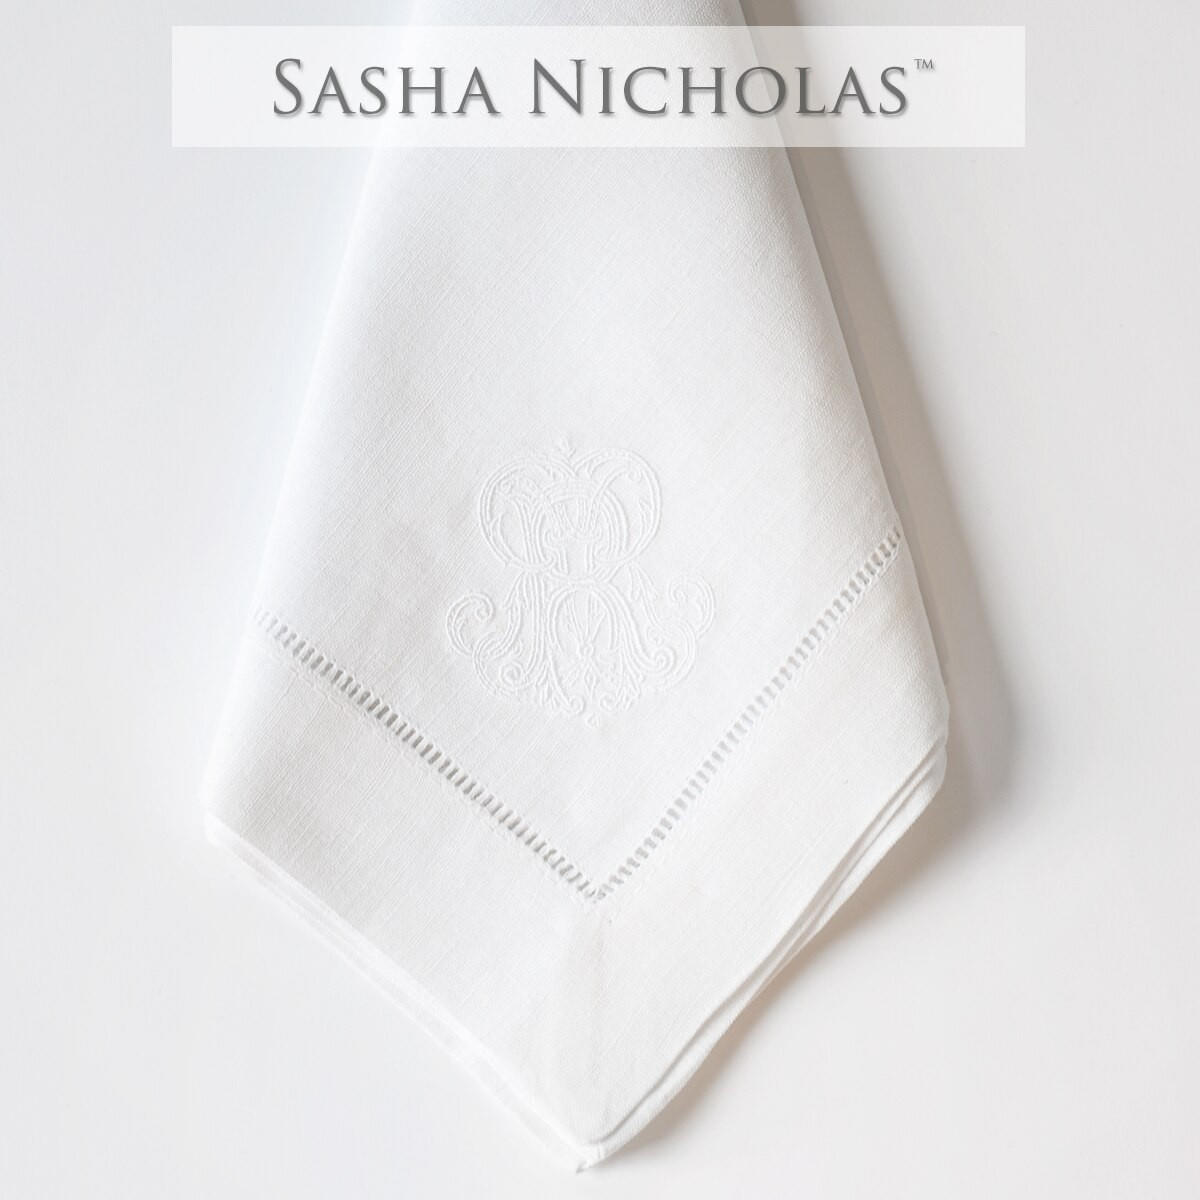 Seiler-harkess Sasha Nicholas White Linen Dinner Napkin, Couture Monogram, Seiler -Harkess SNLIN100, Sasha Nicholas